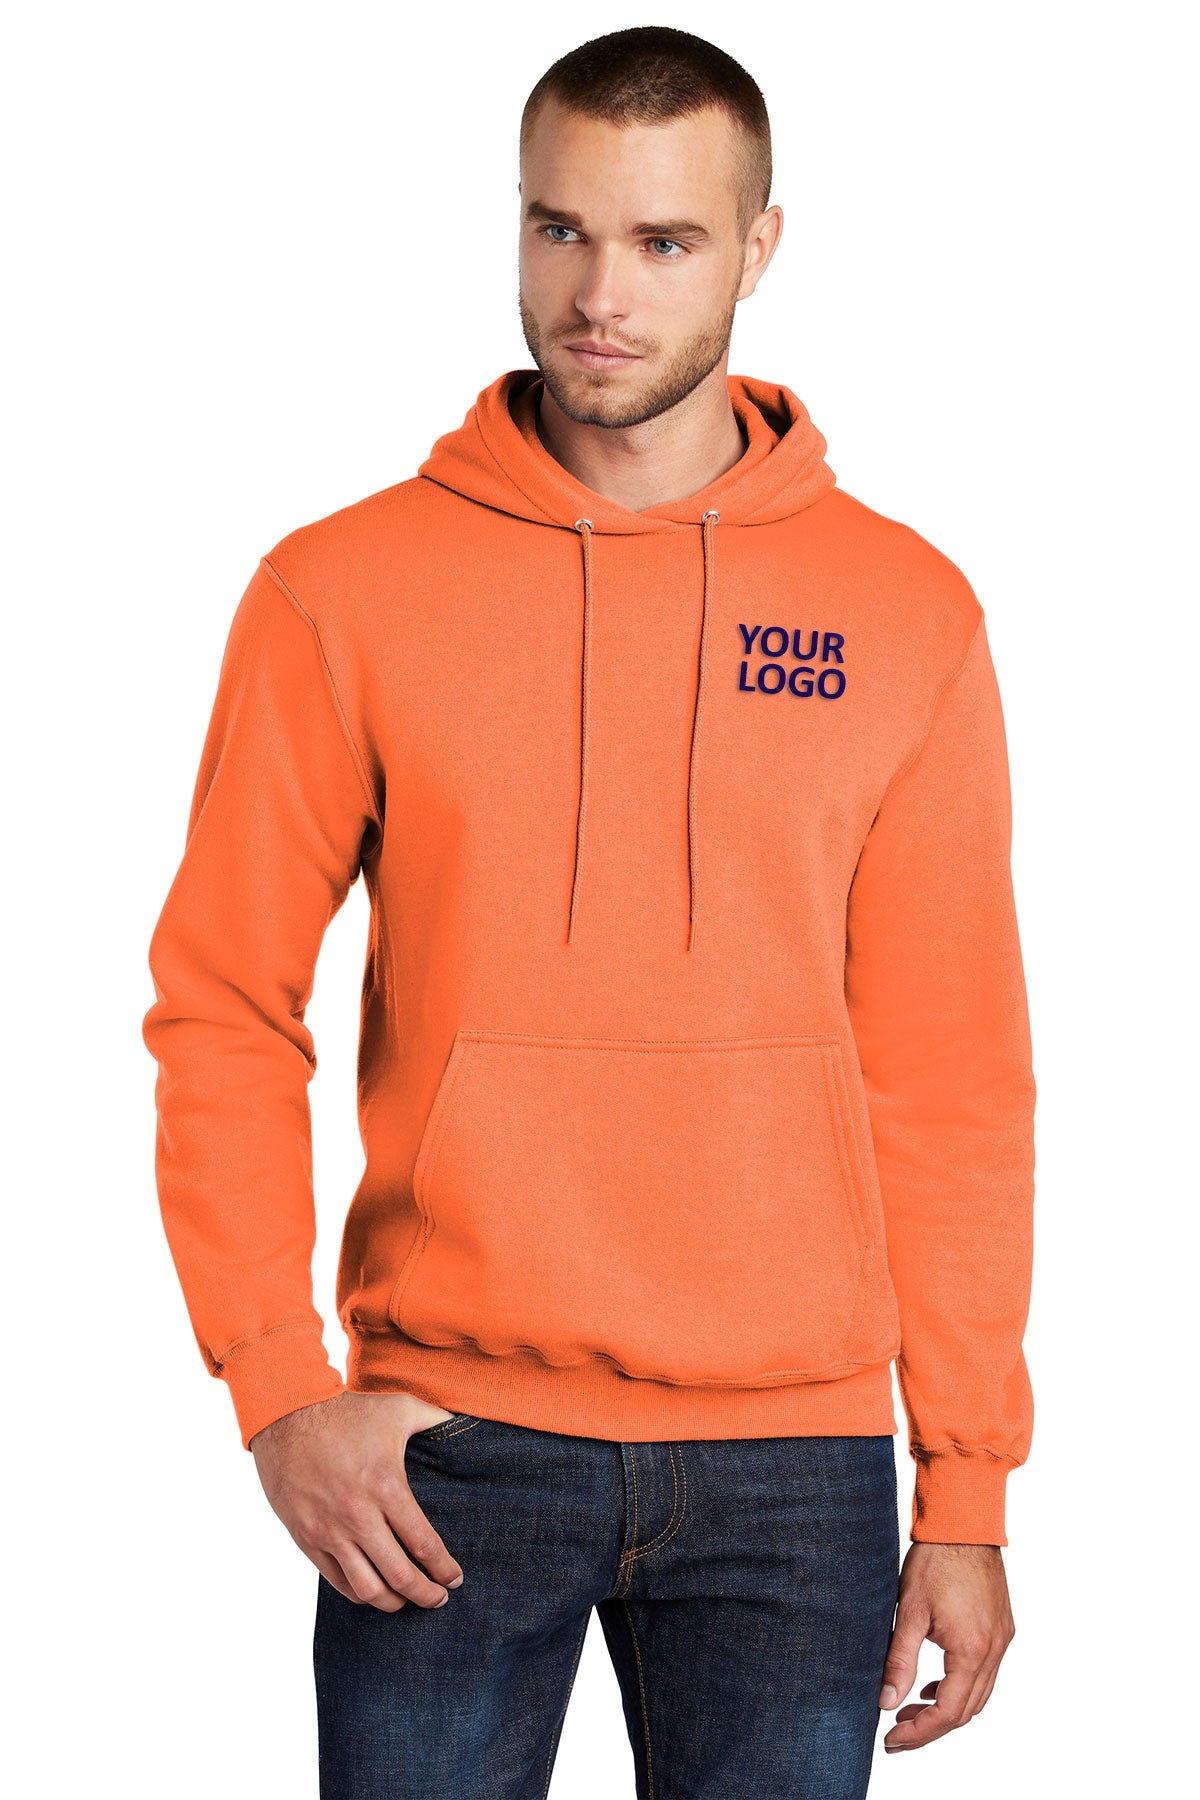 port & company neon orange pc78h sweatshirts with company logo